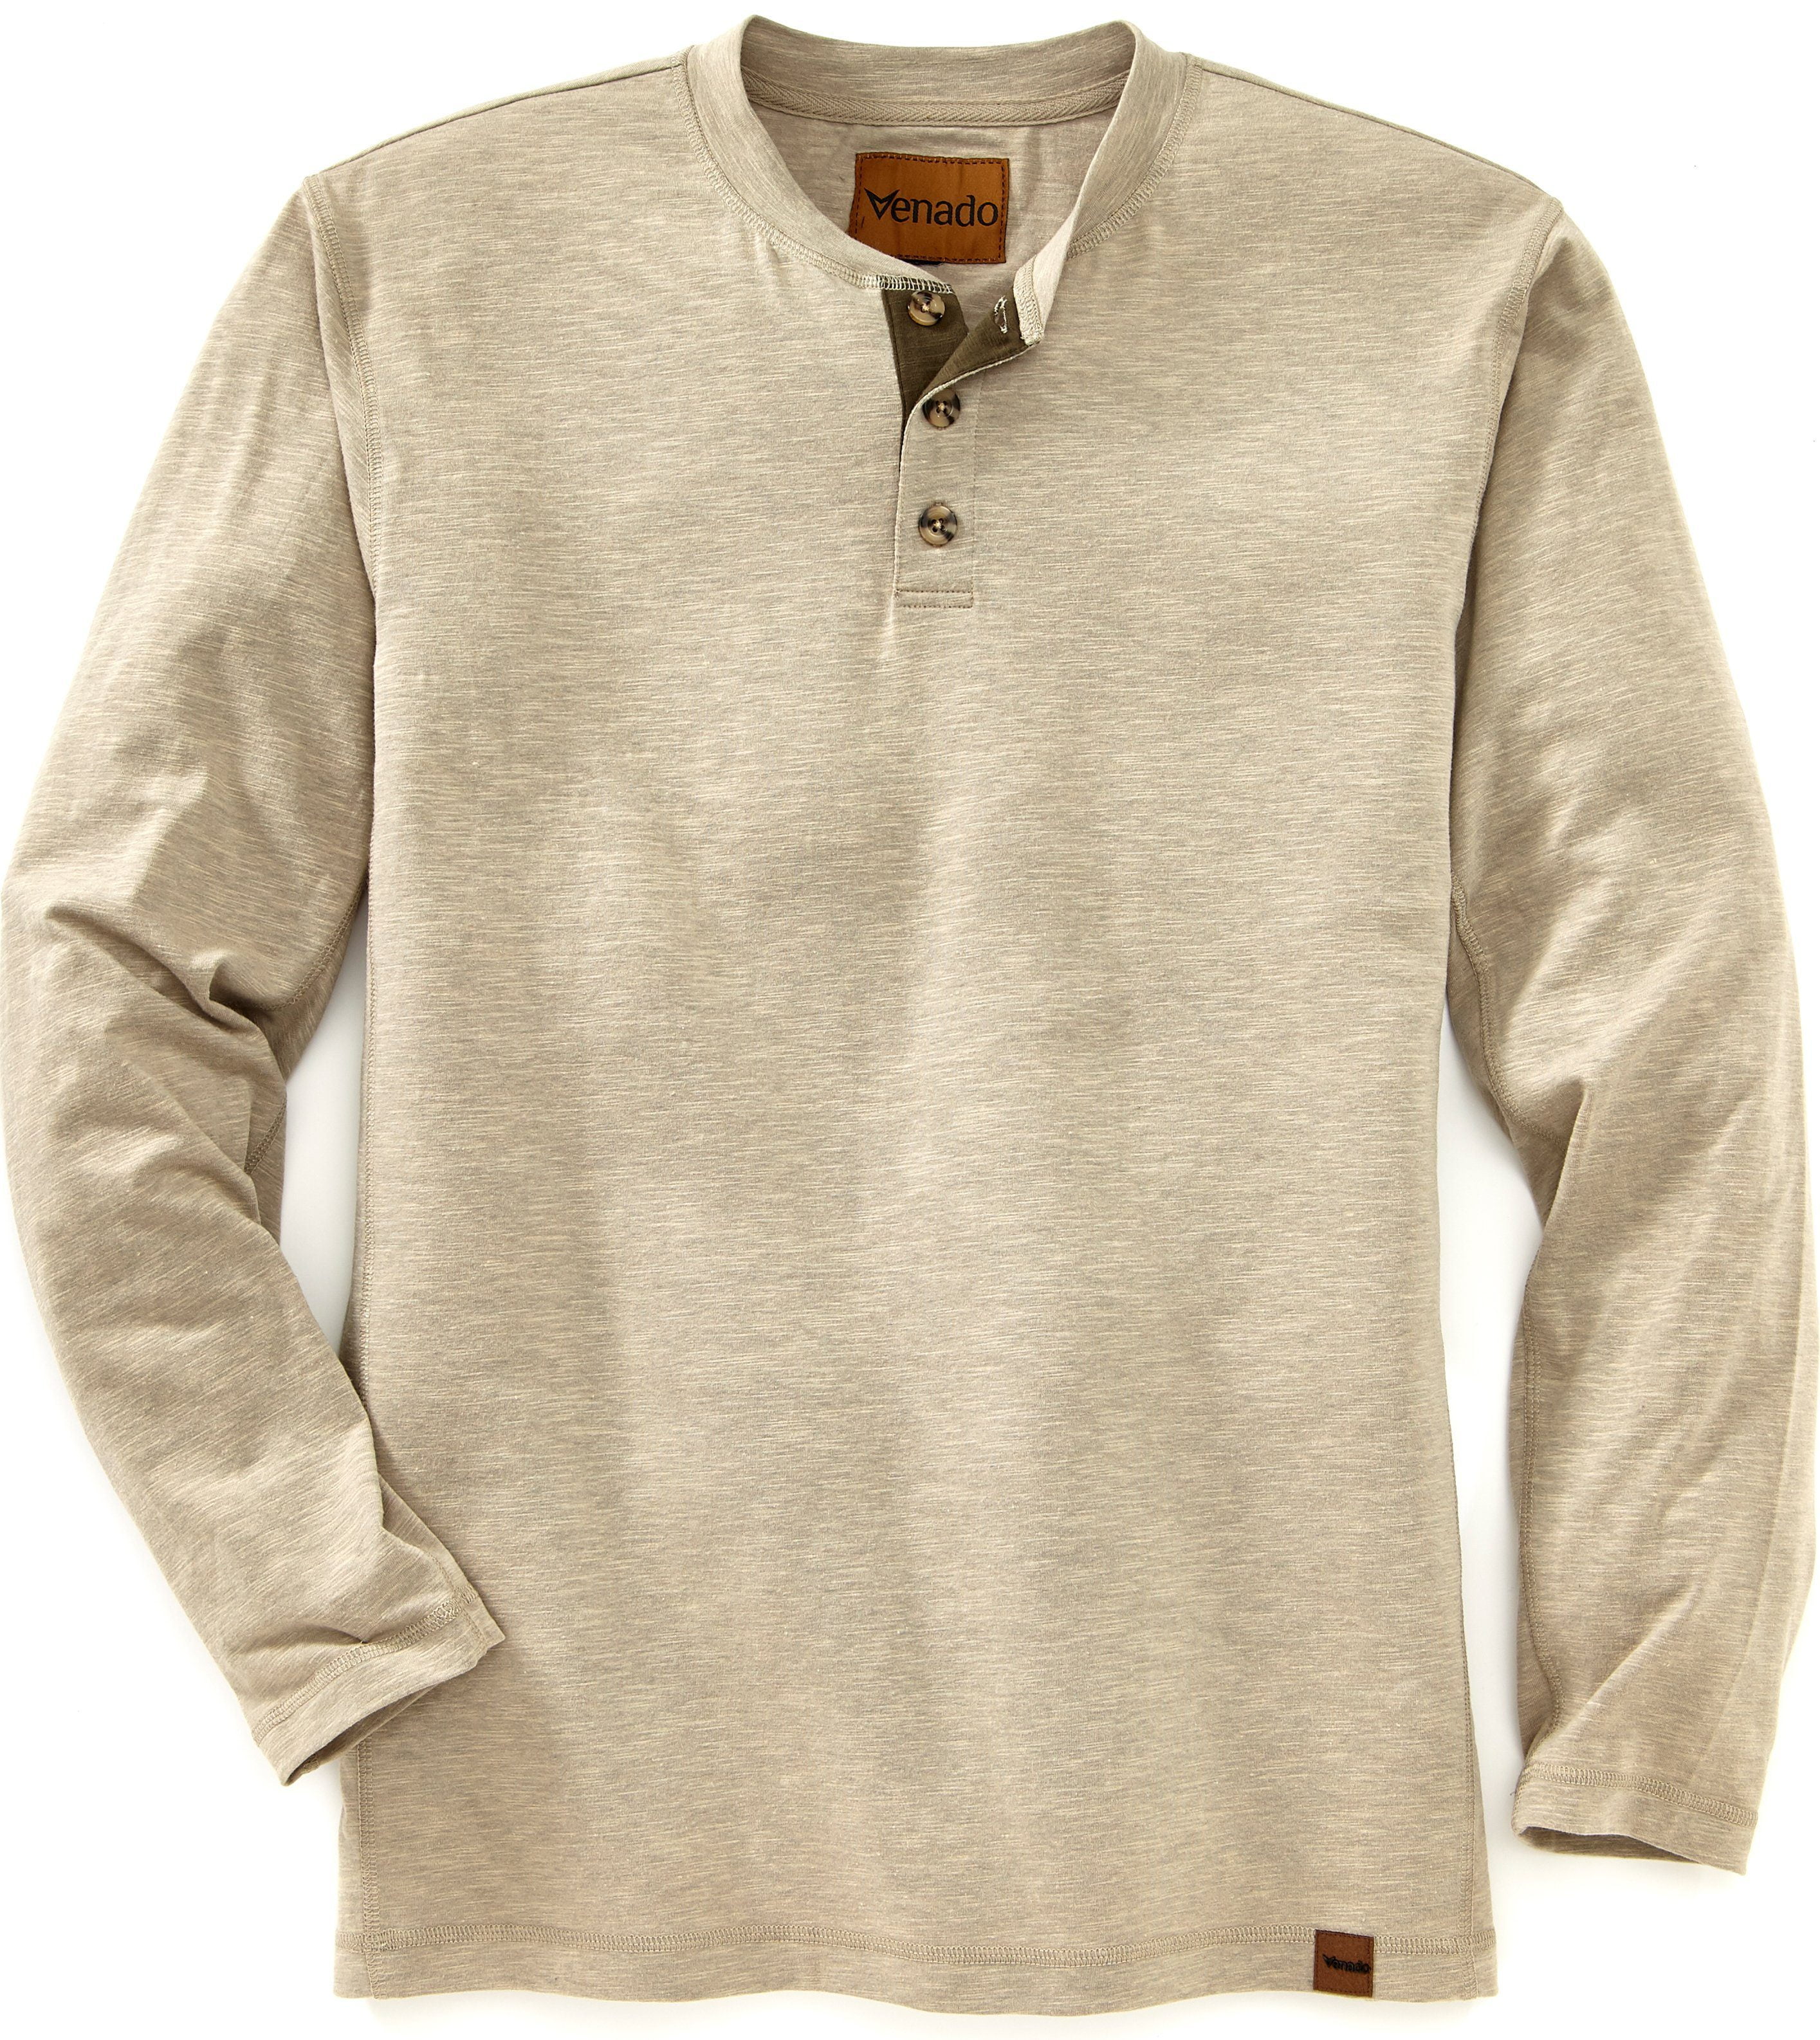 Venado - Venado Henley Long Sleeve Shirts for Men - Mens Henley with Flex  Material (Small, Oatmeal) - Walmart.com - Walmart.com